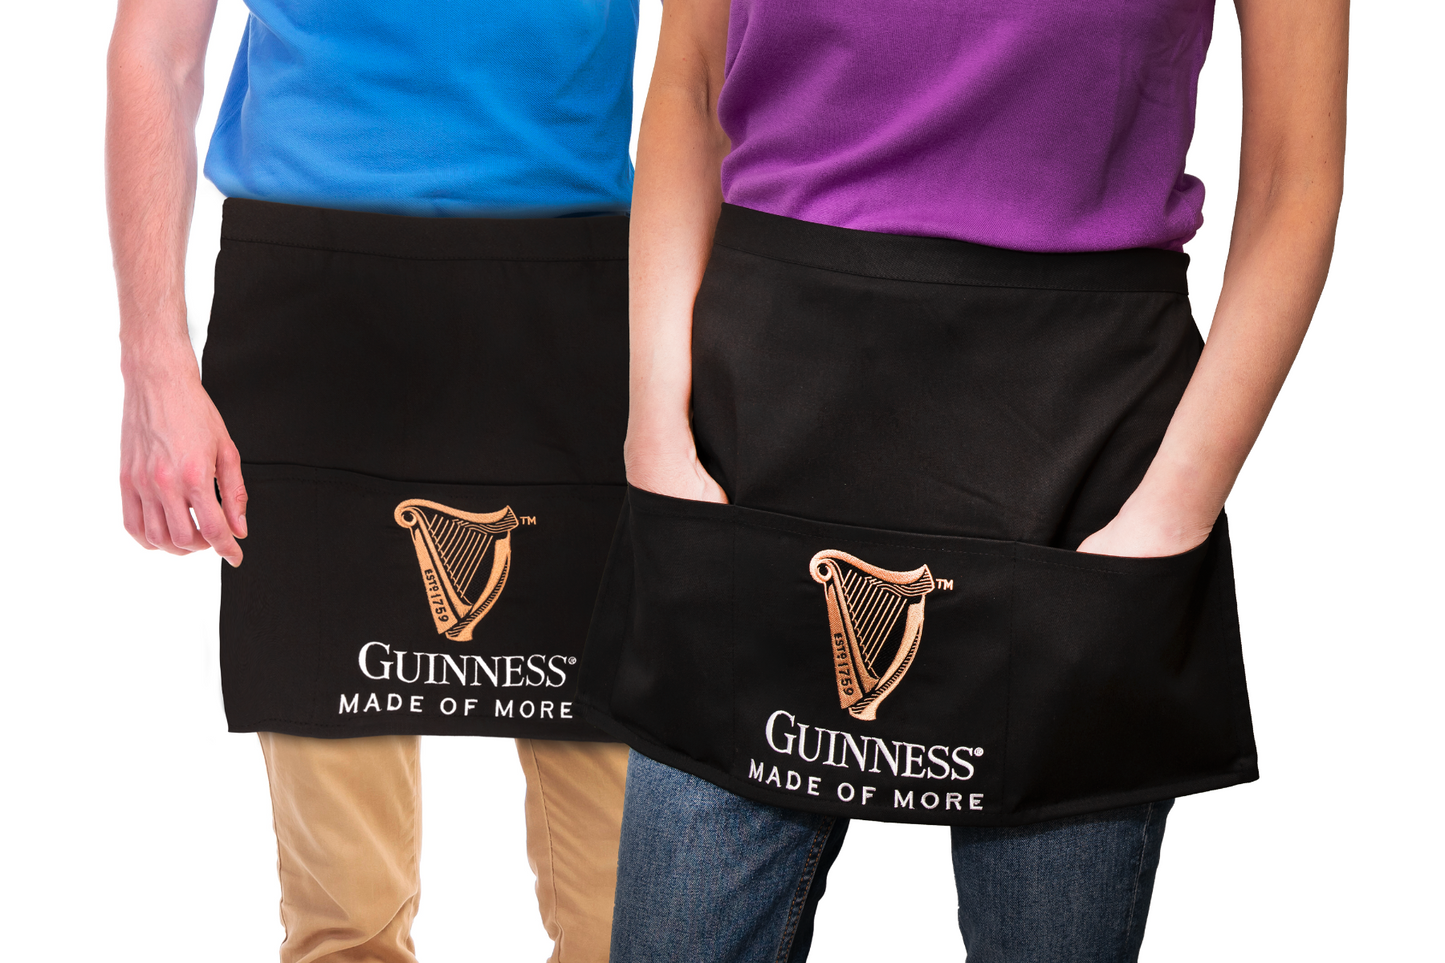 Guinness Half Apron from Guinness brand.